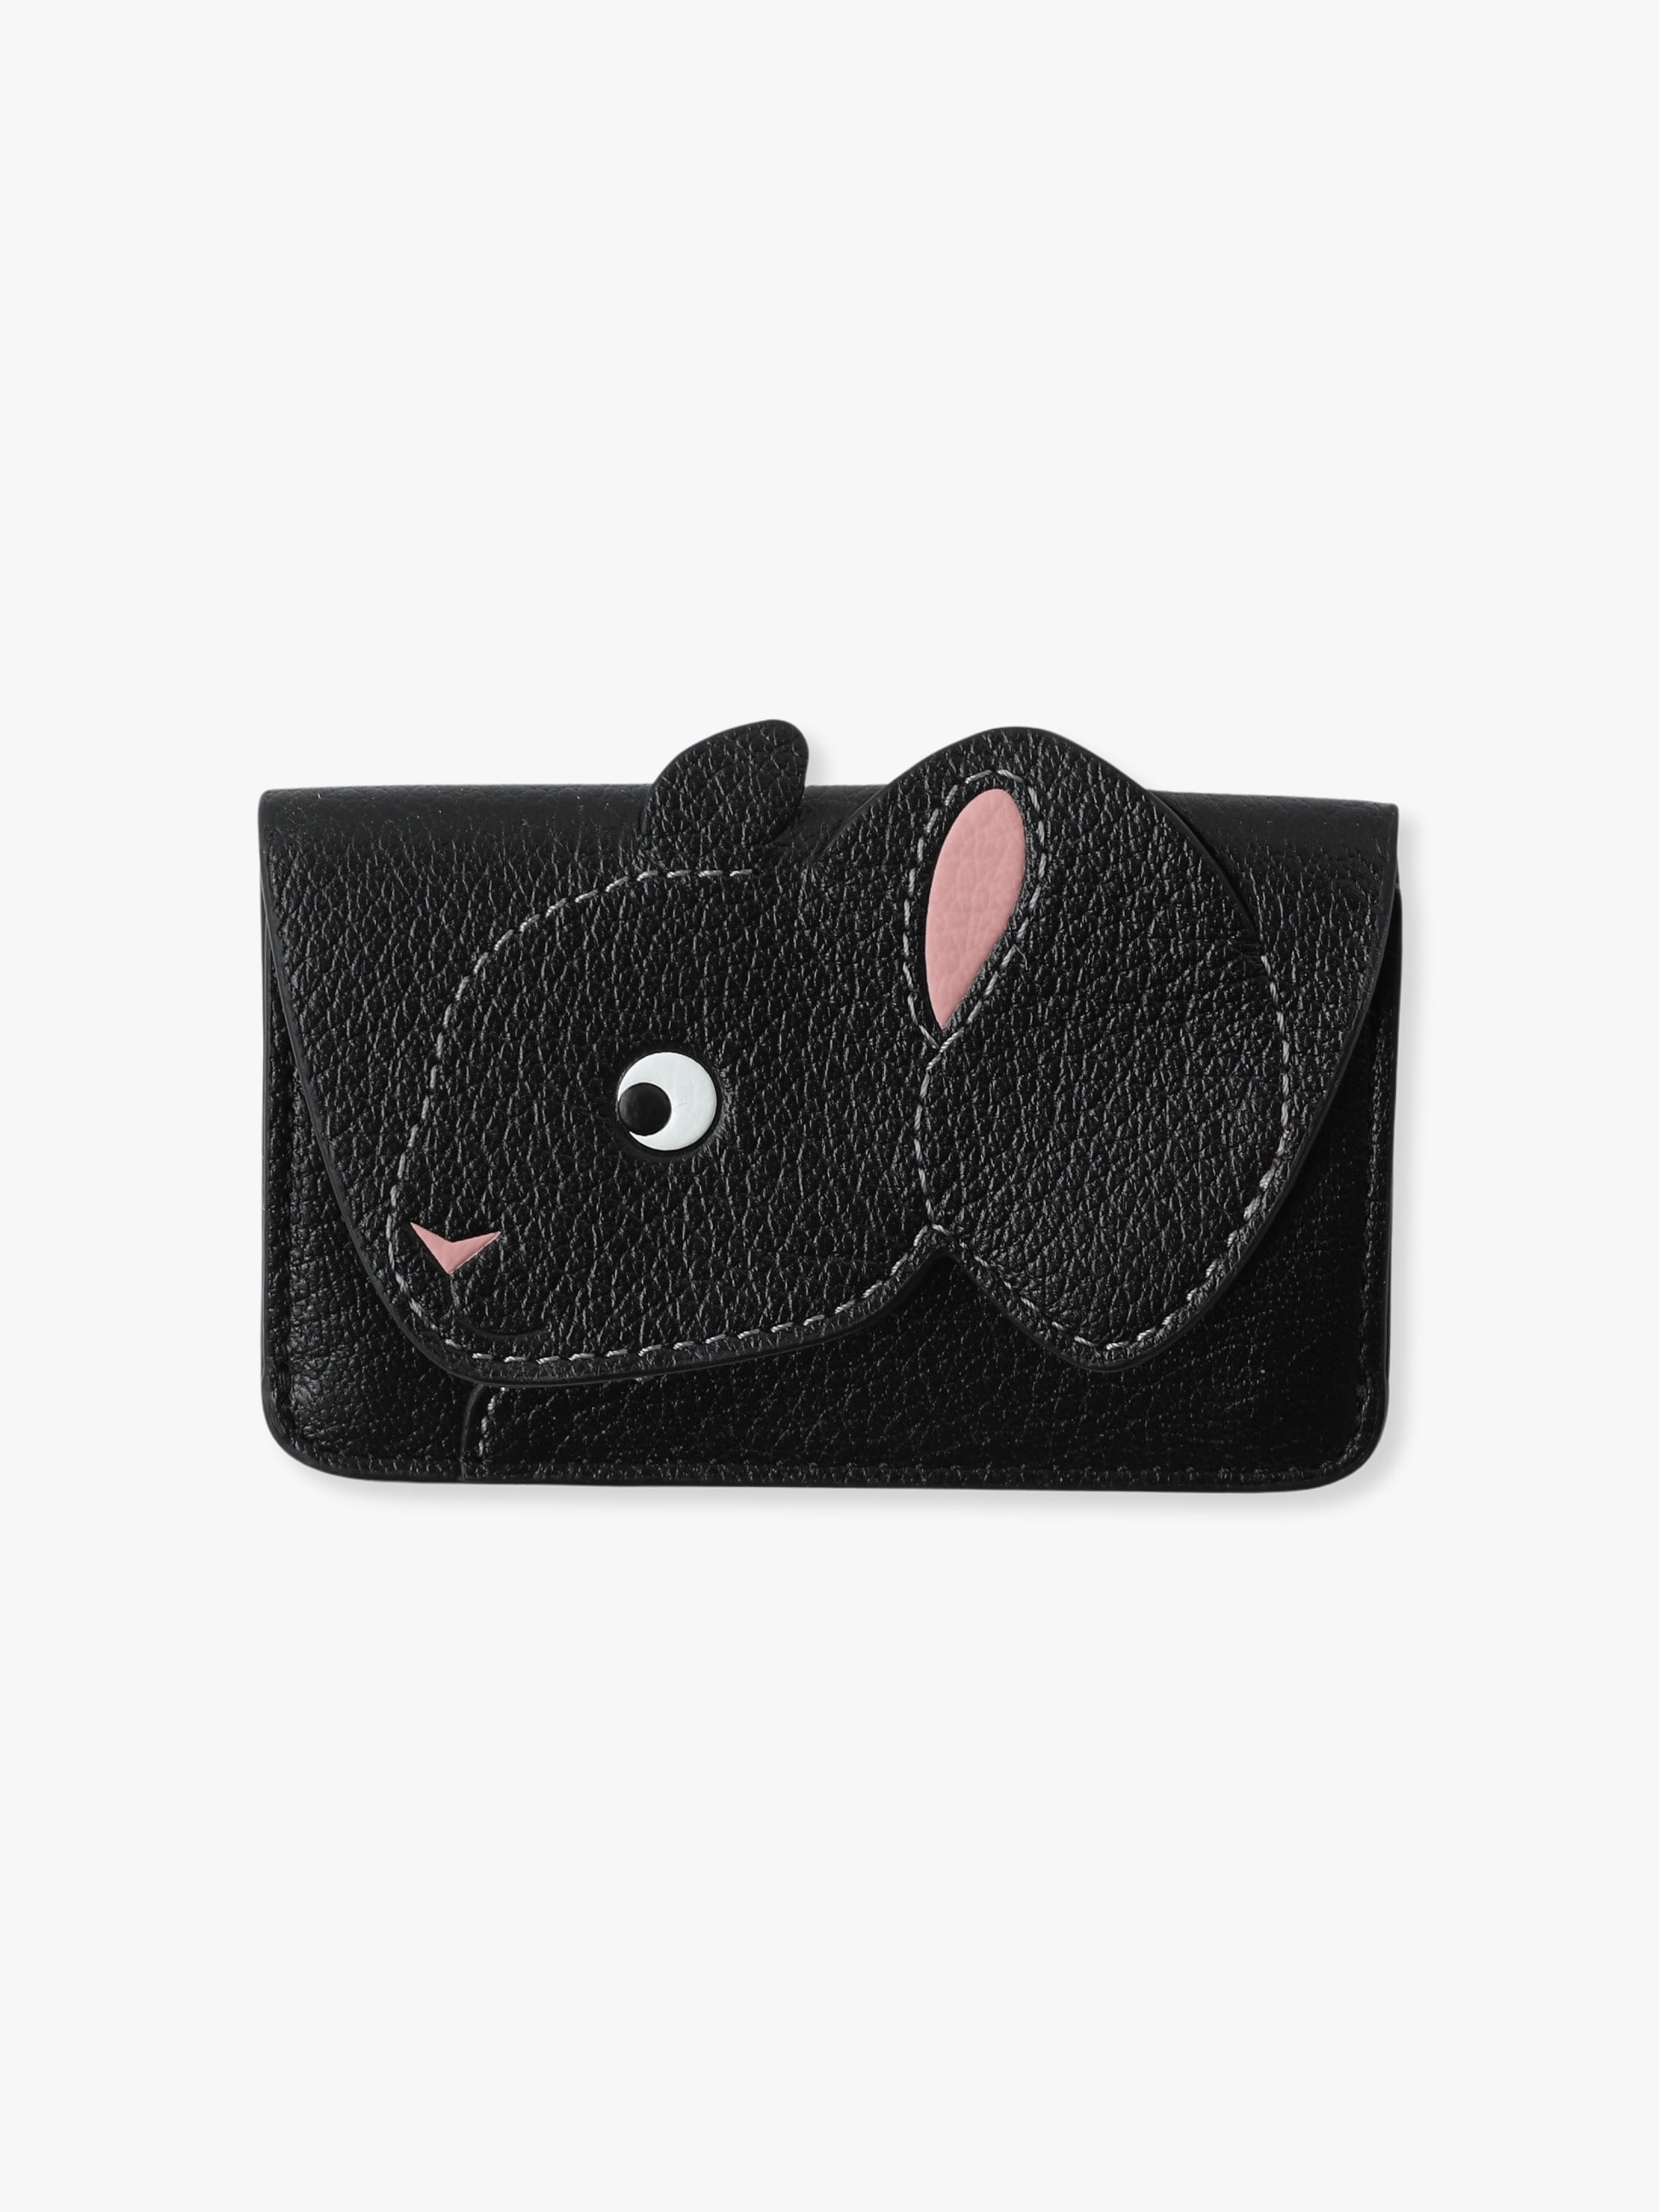 Rabbit in Black Cap Card Case